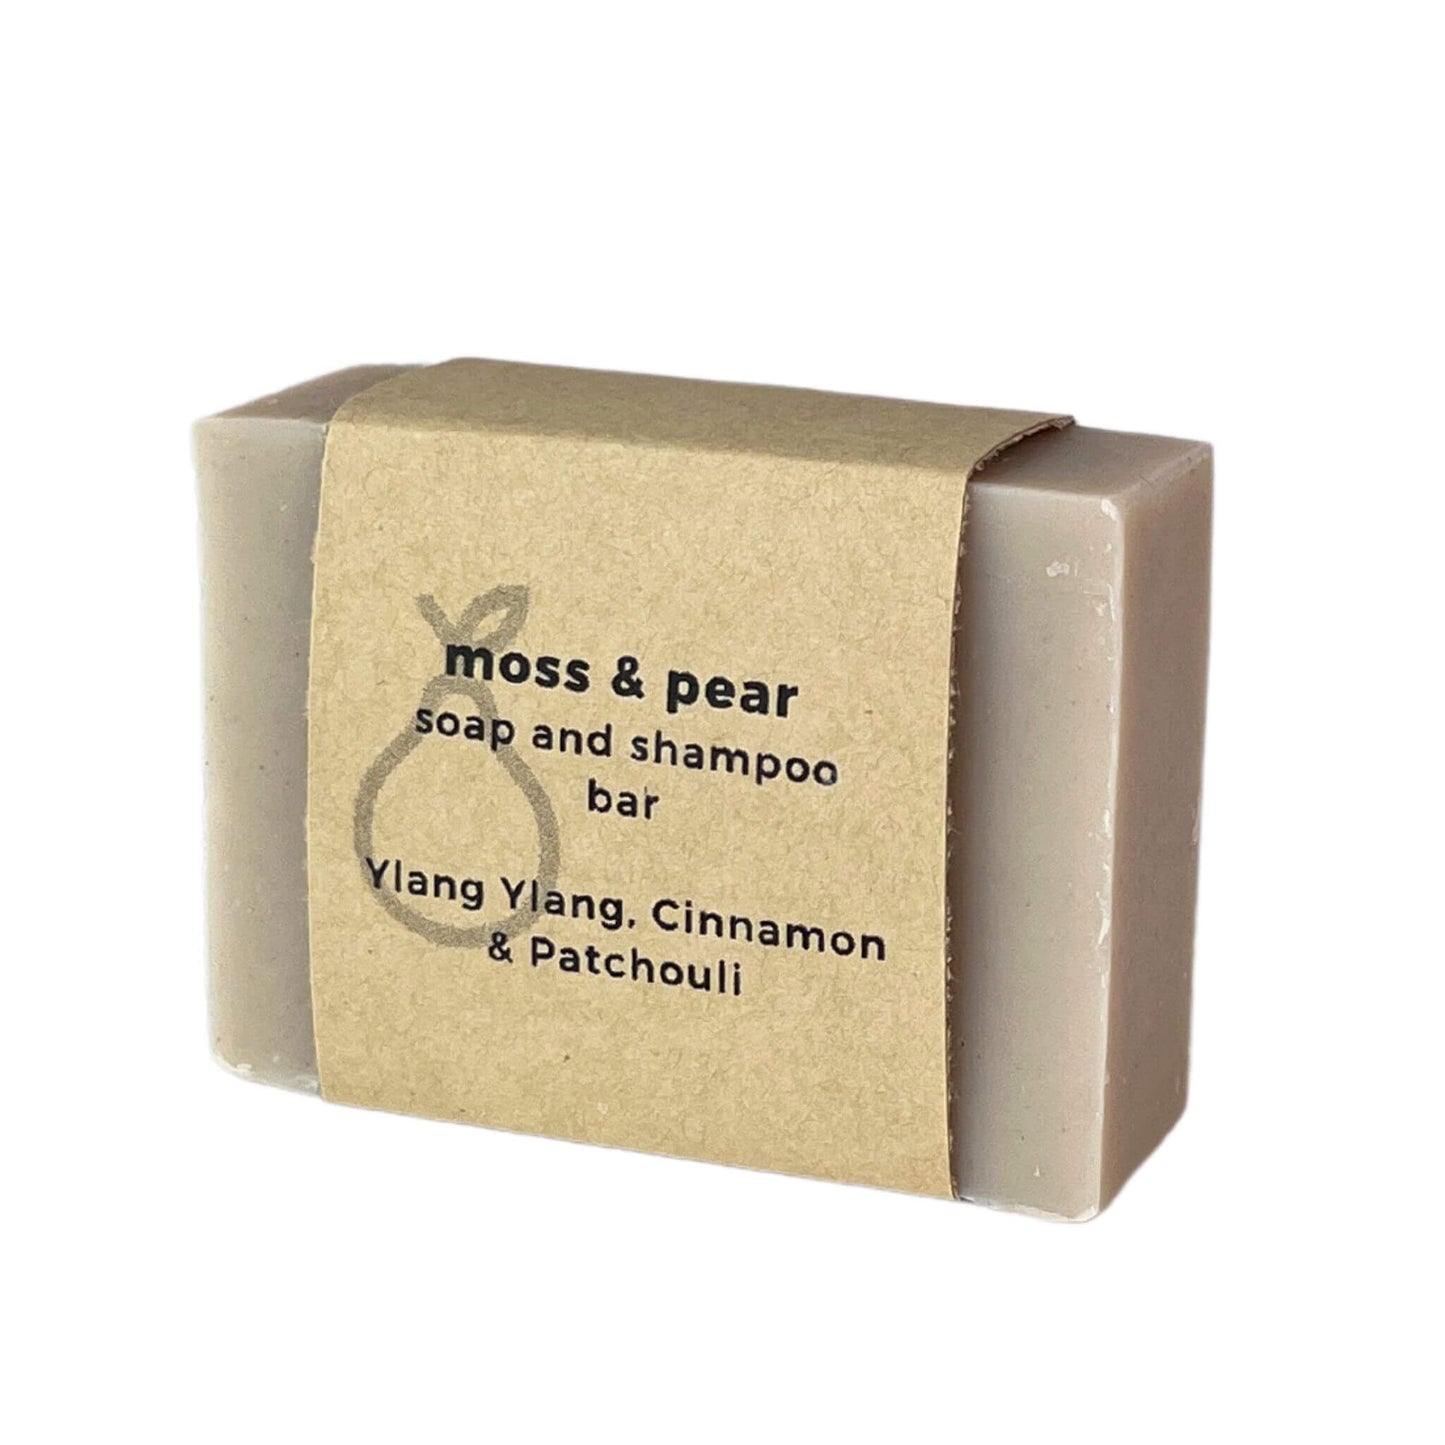 ylang ylang cinnamon and patchouli oil solid shampoo bar moss & pear 